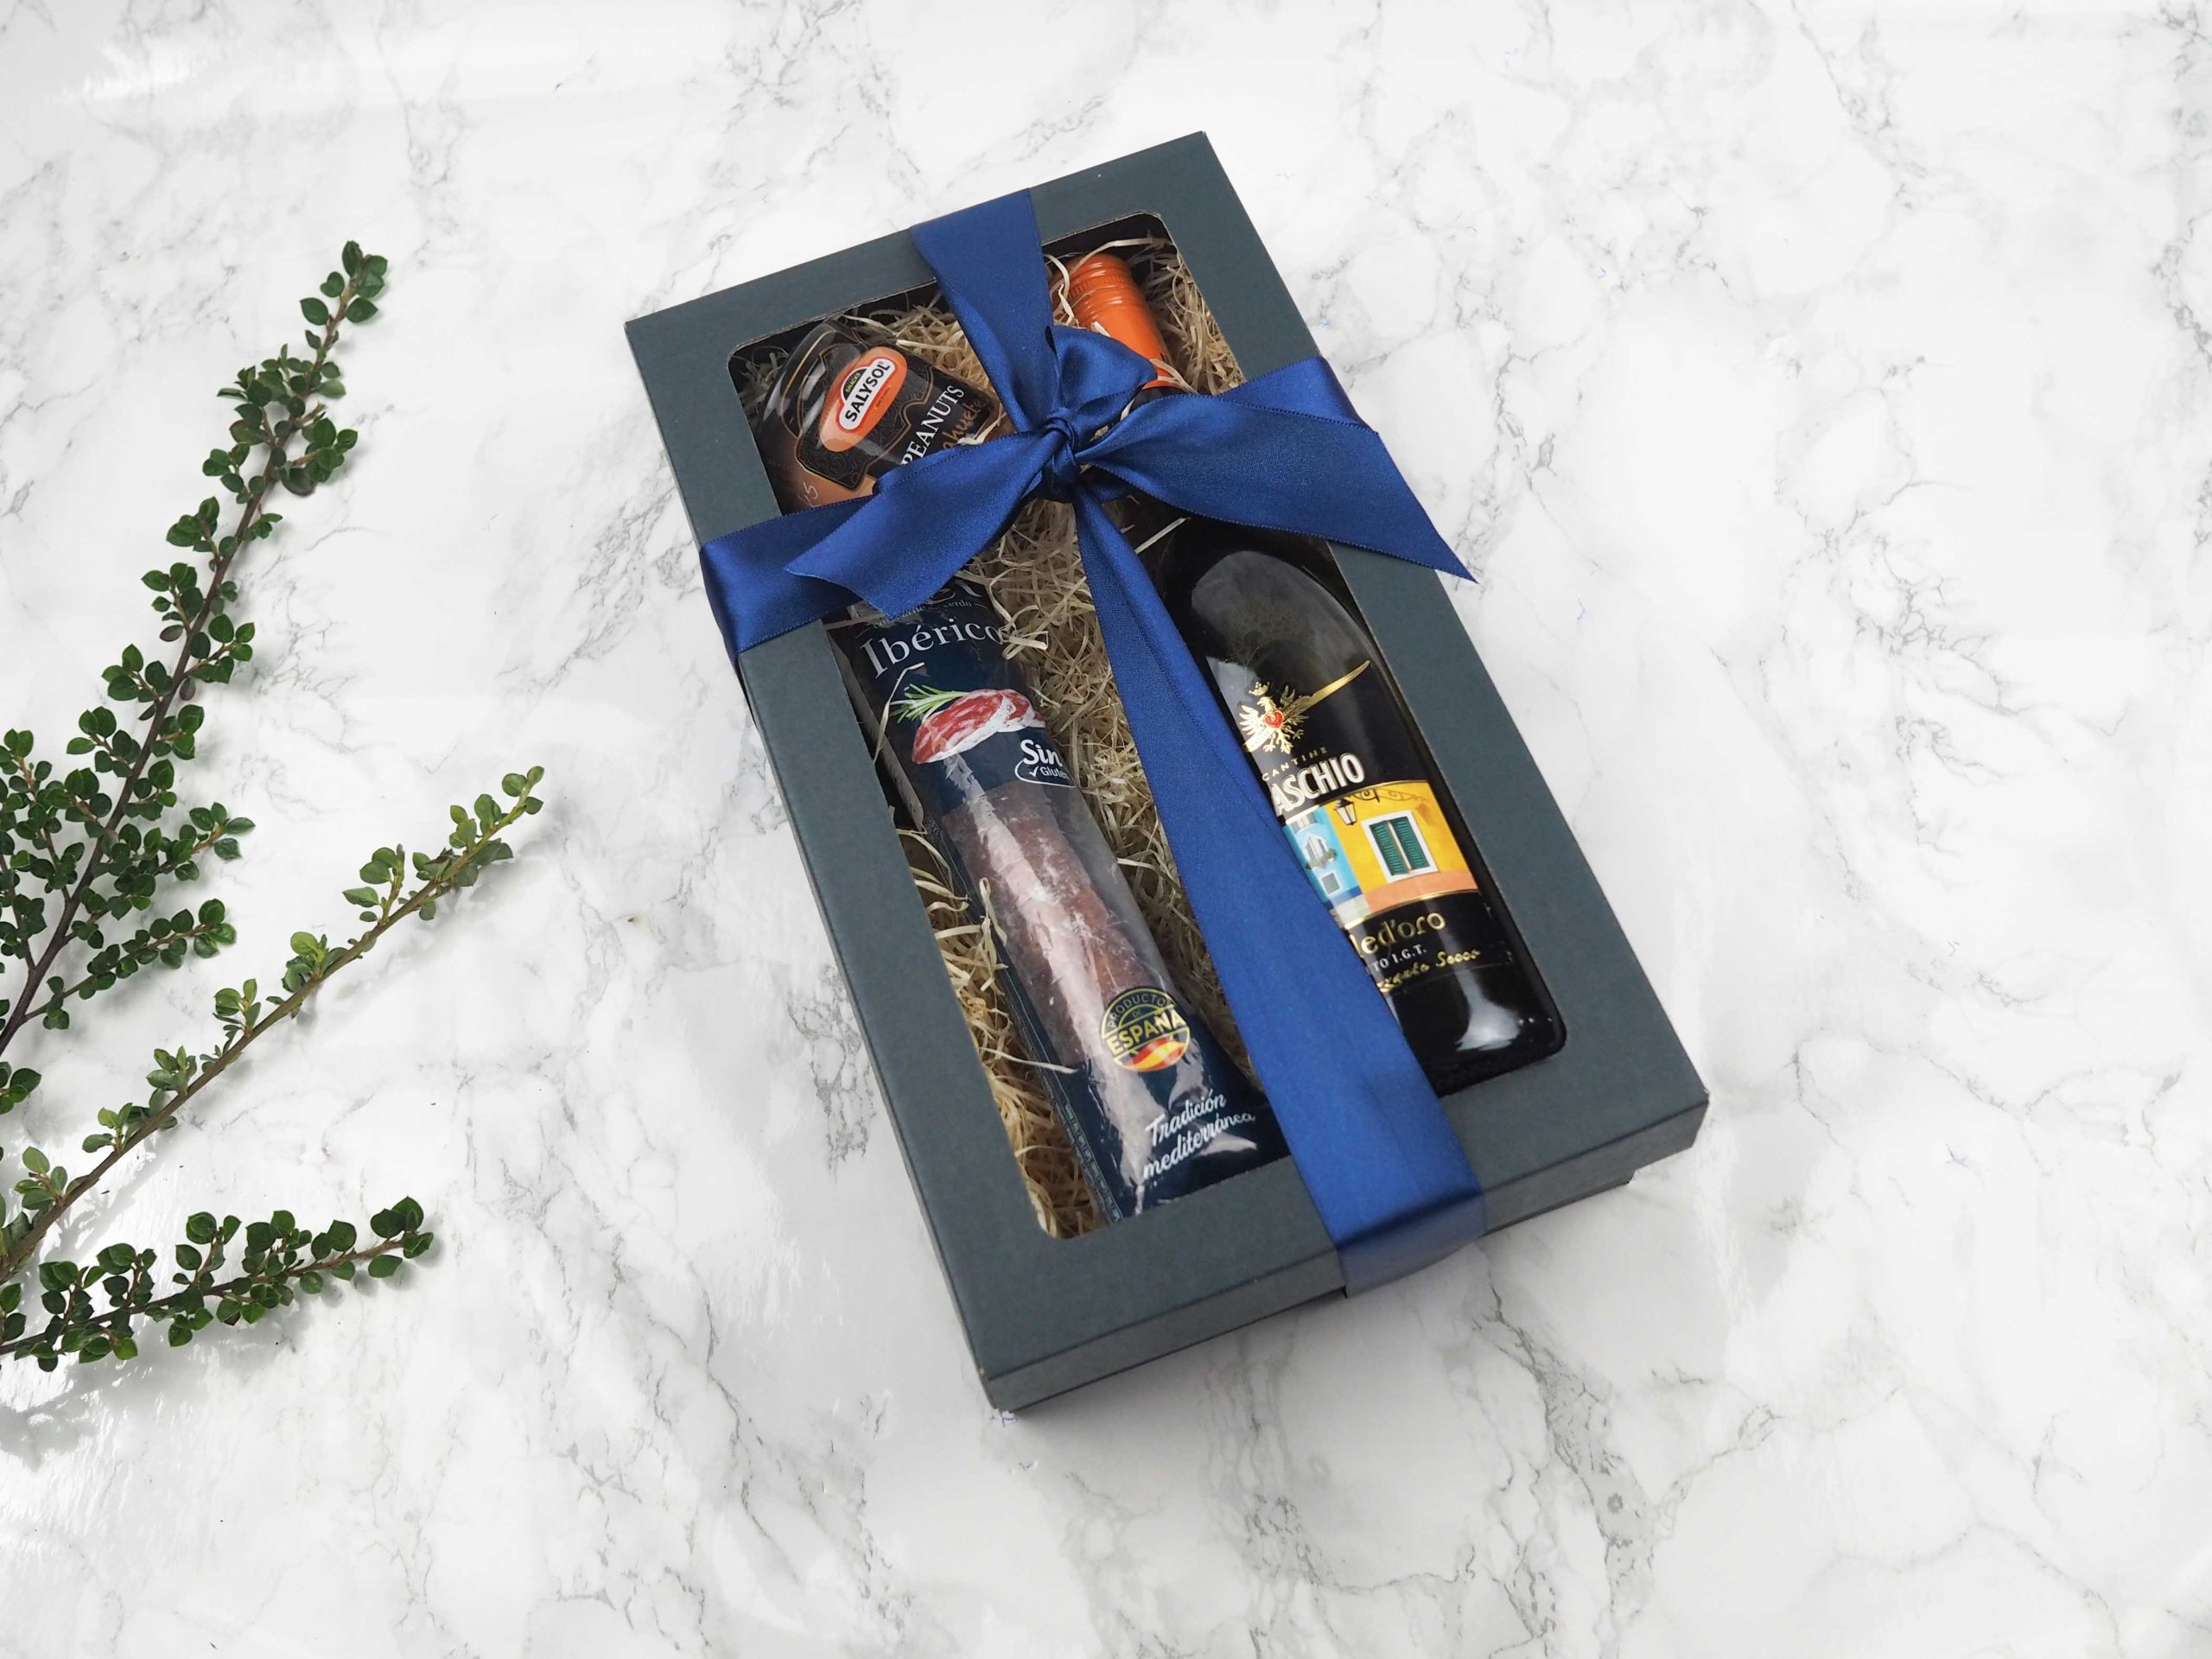 Dárkový balíček Blue Maschio v sobě obsahuje solené arašídy, fuet Ibérico a Frizzante Prosecco Bianco. Darujte balíček, který potěší každého obdarovaného.